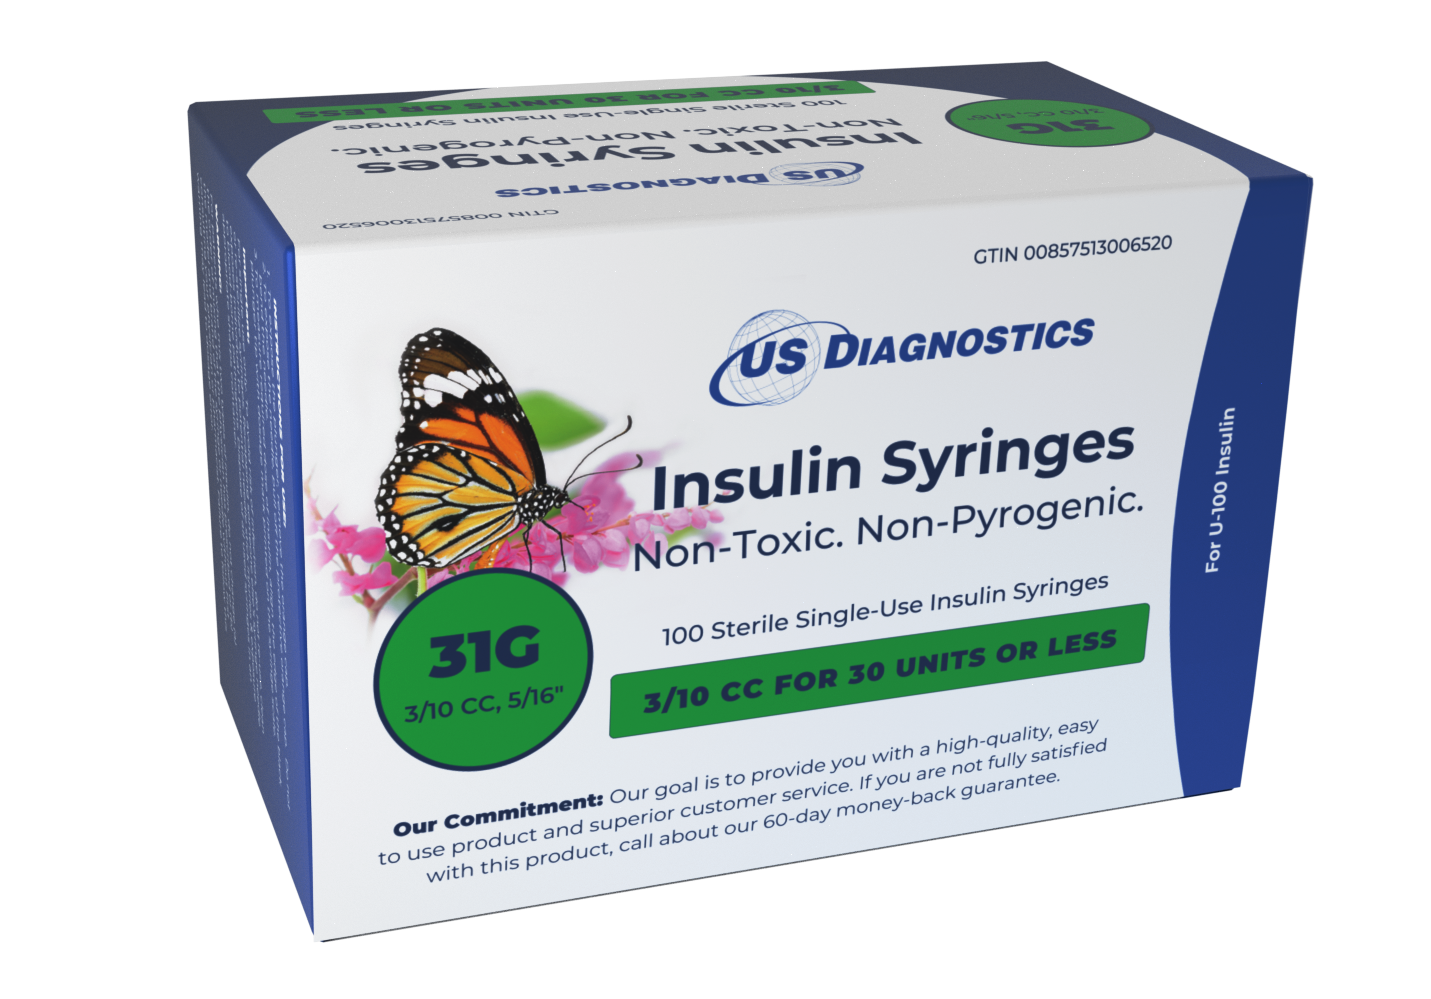 Insulin Syringes 31G, 3/10cc, 5/16", 100/box